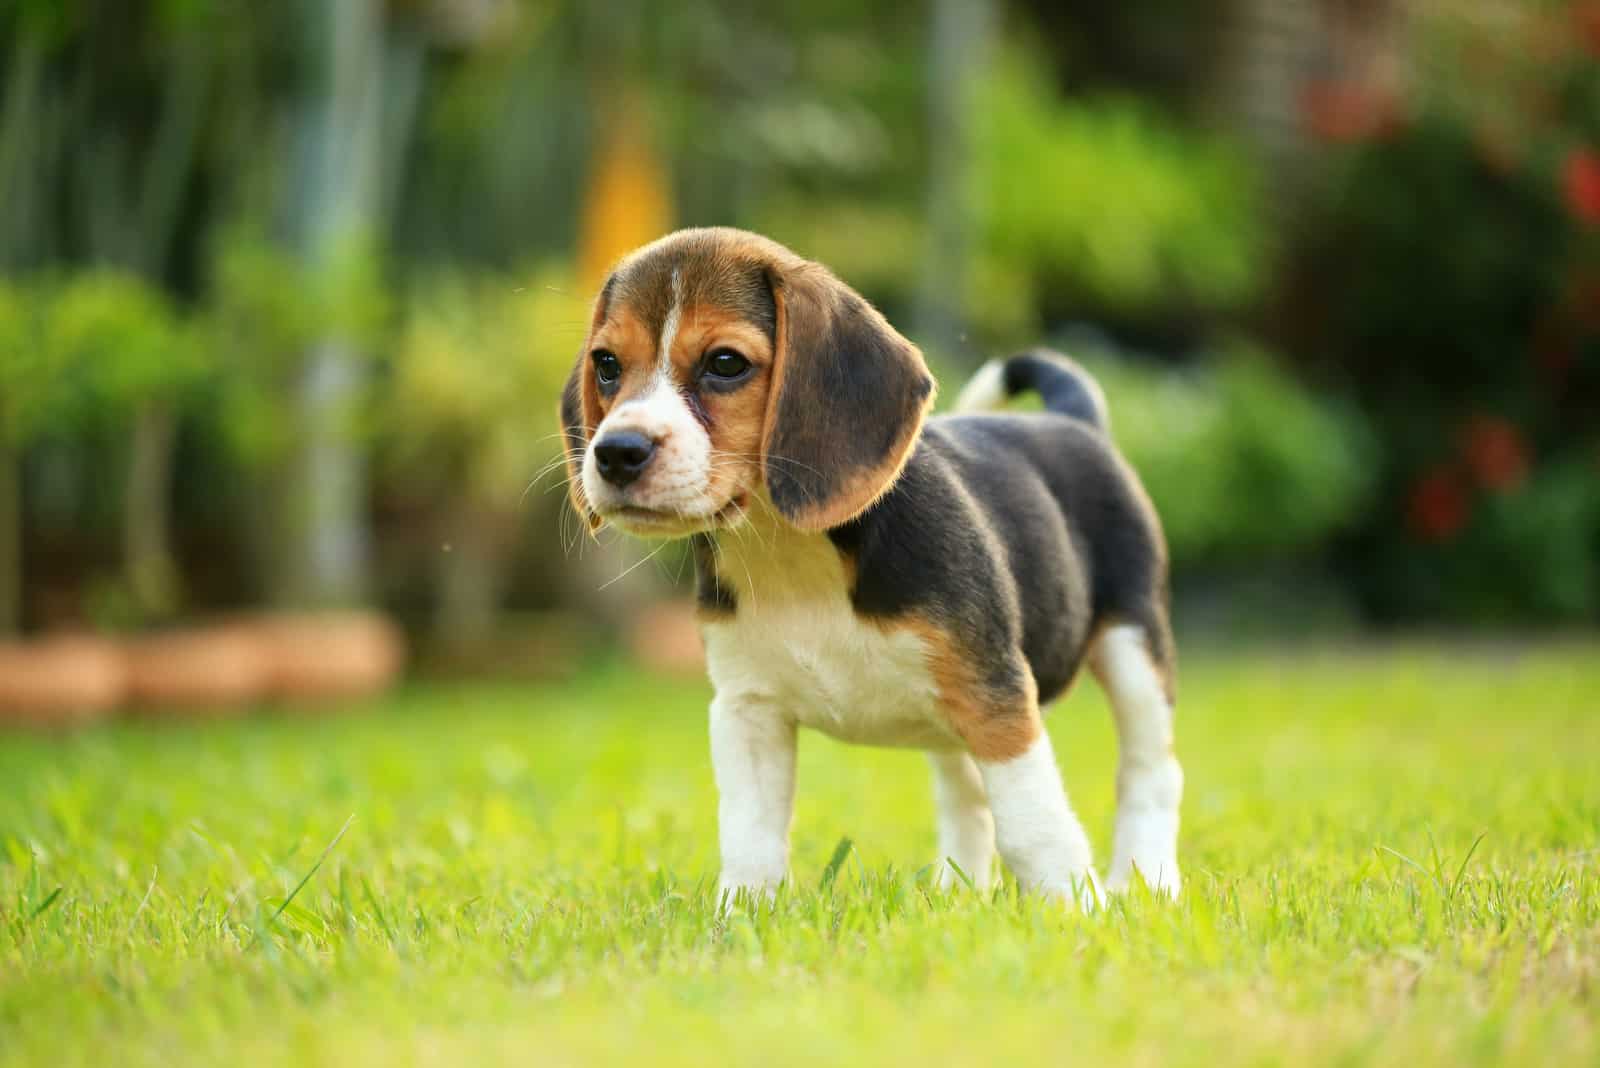 Beagle puppy walking on grass